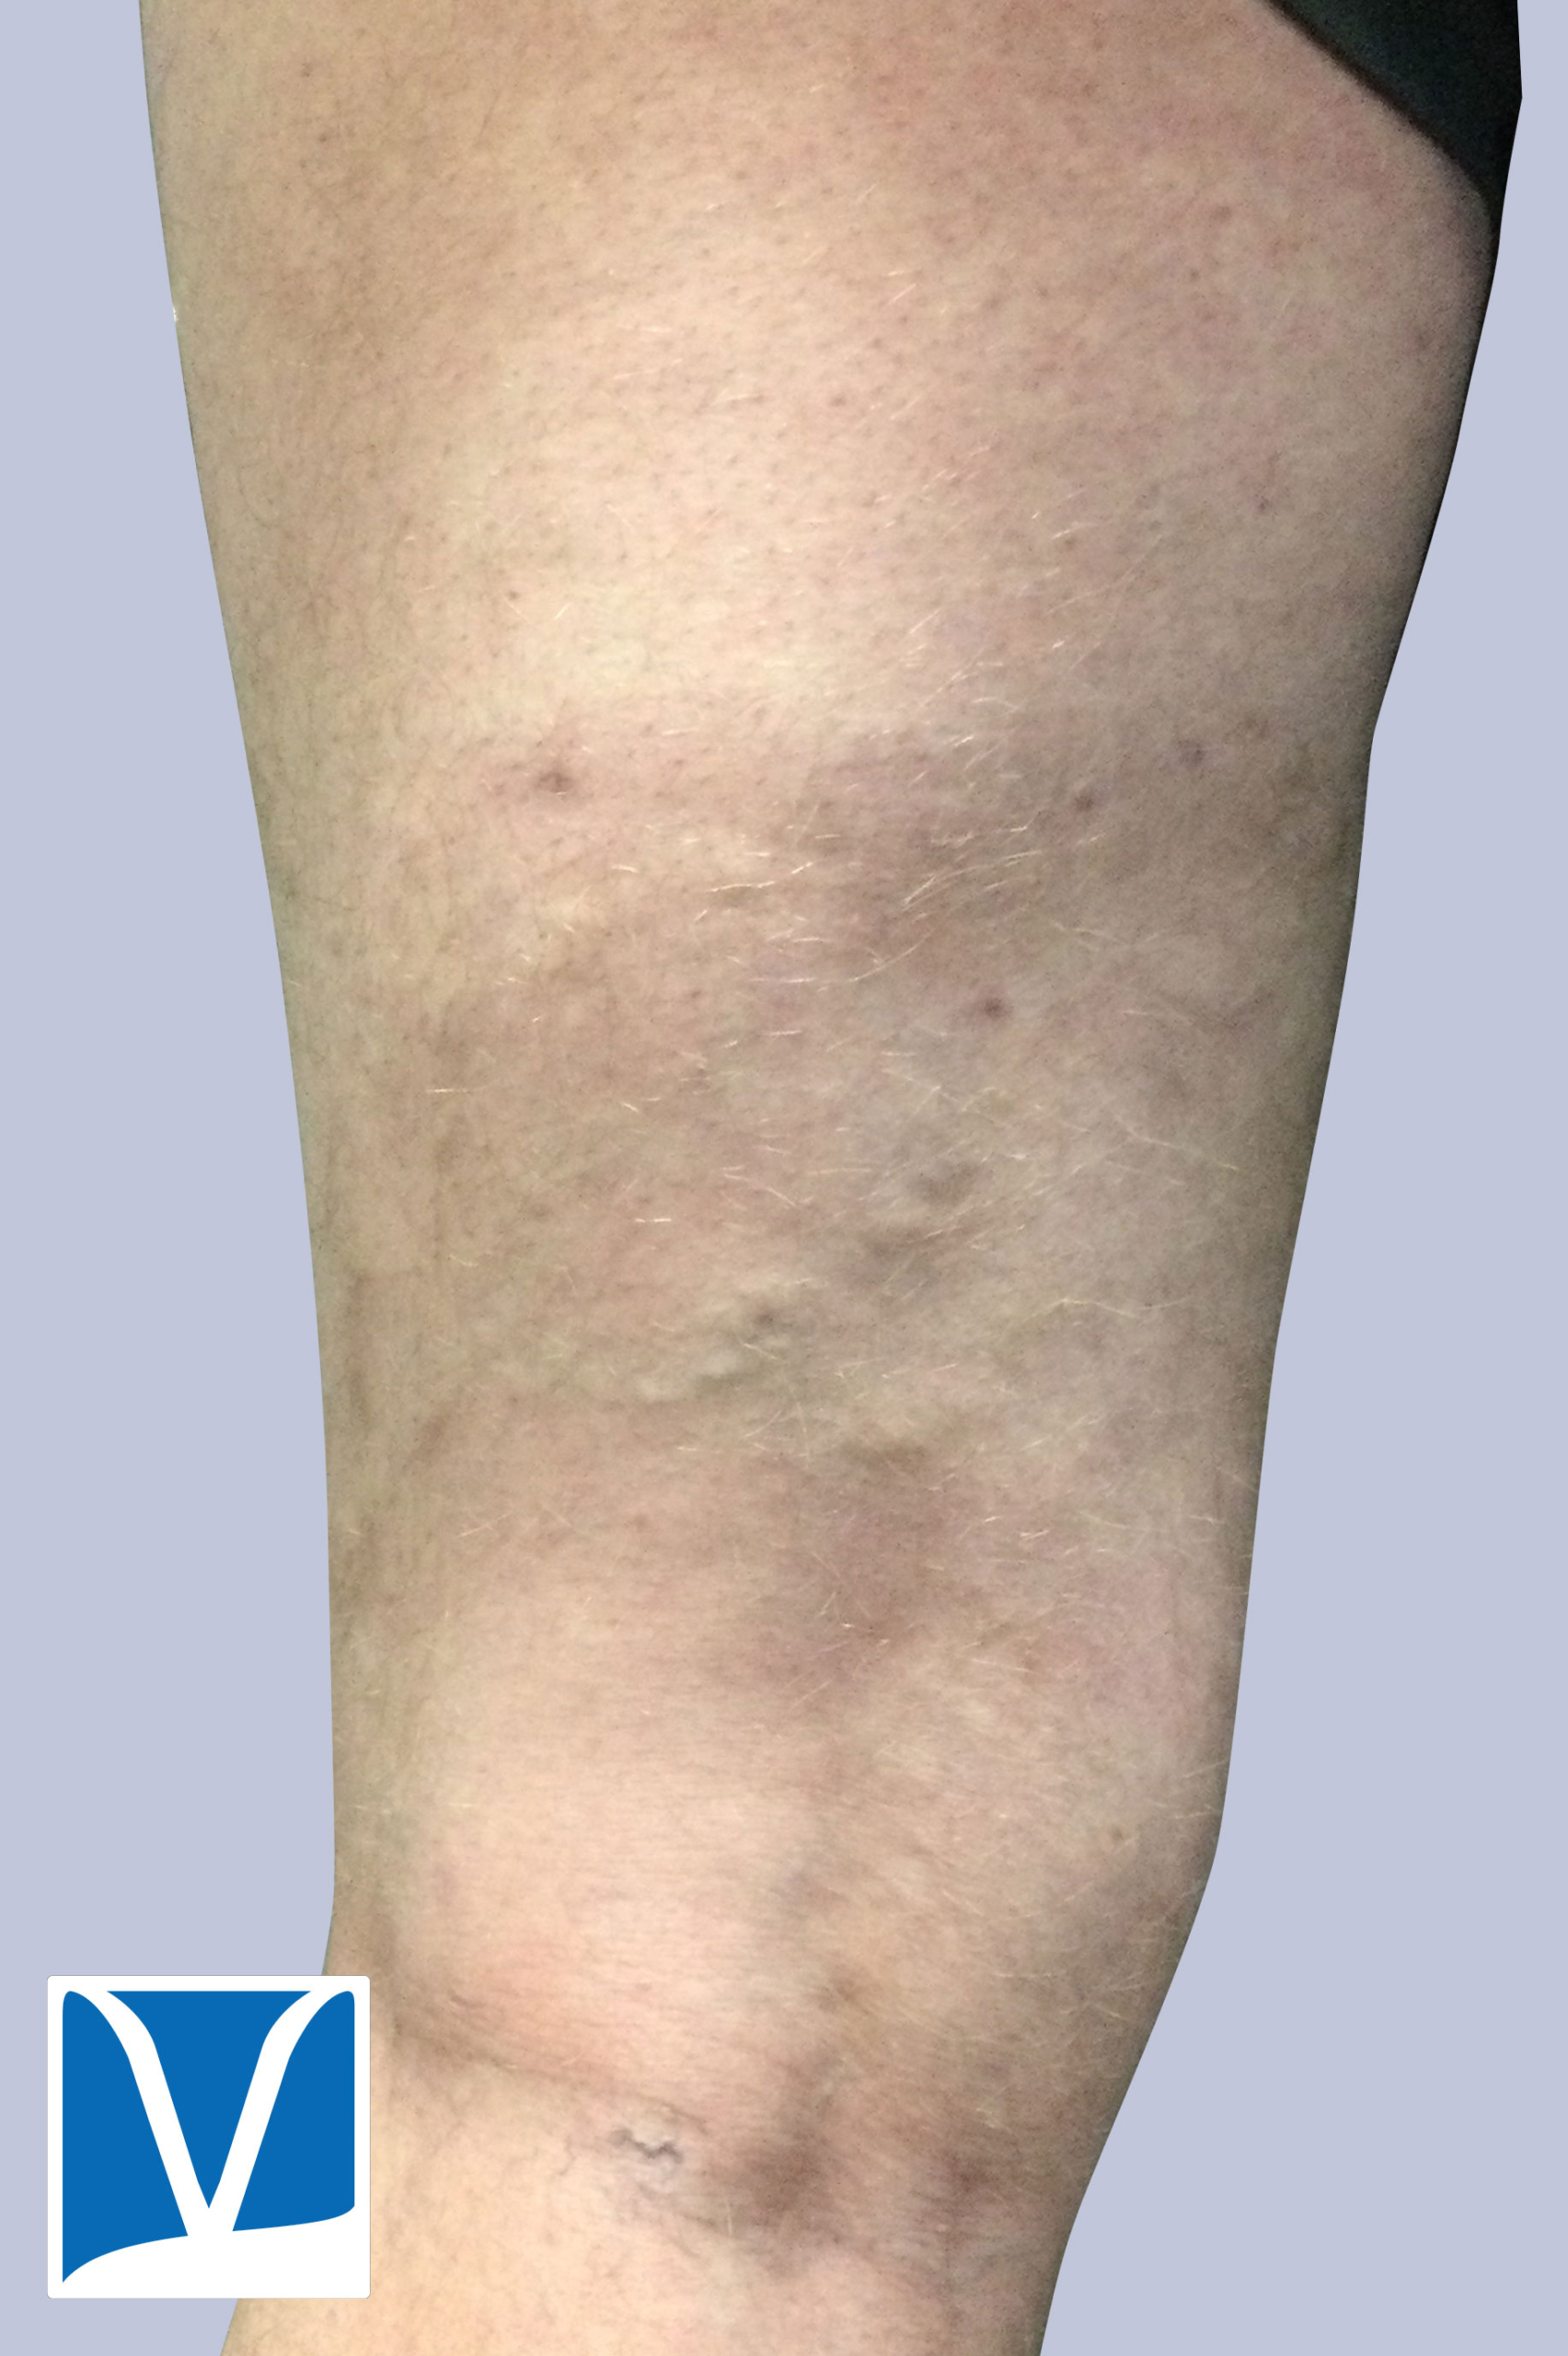 varicose veins after treatment